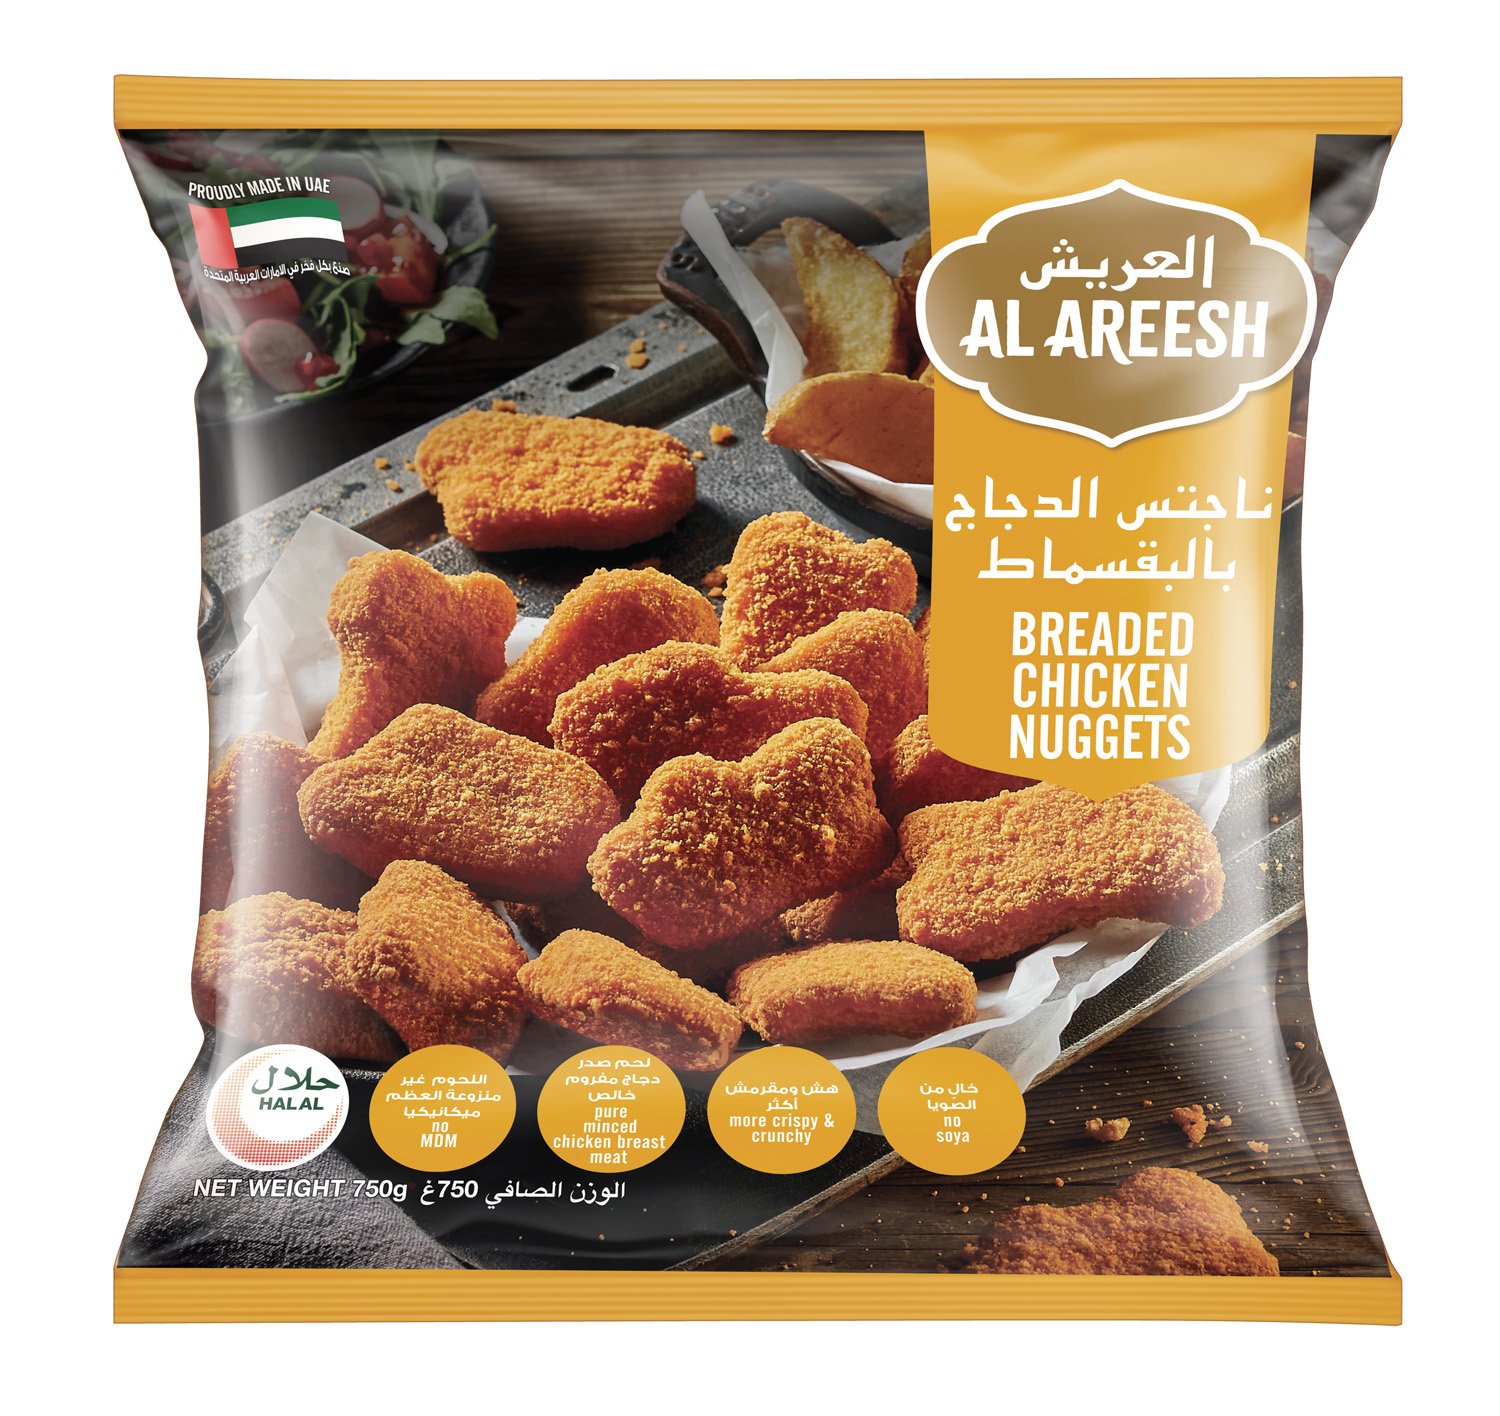 16229_AlAreesh_Breaded Chicken Nuggets_750g_Pillow bag_Front.jpg